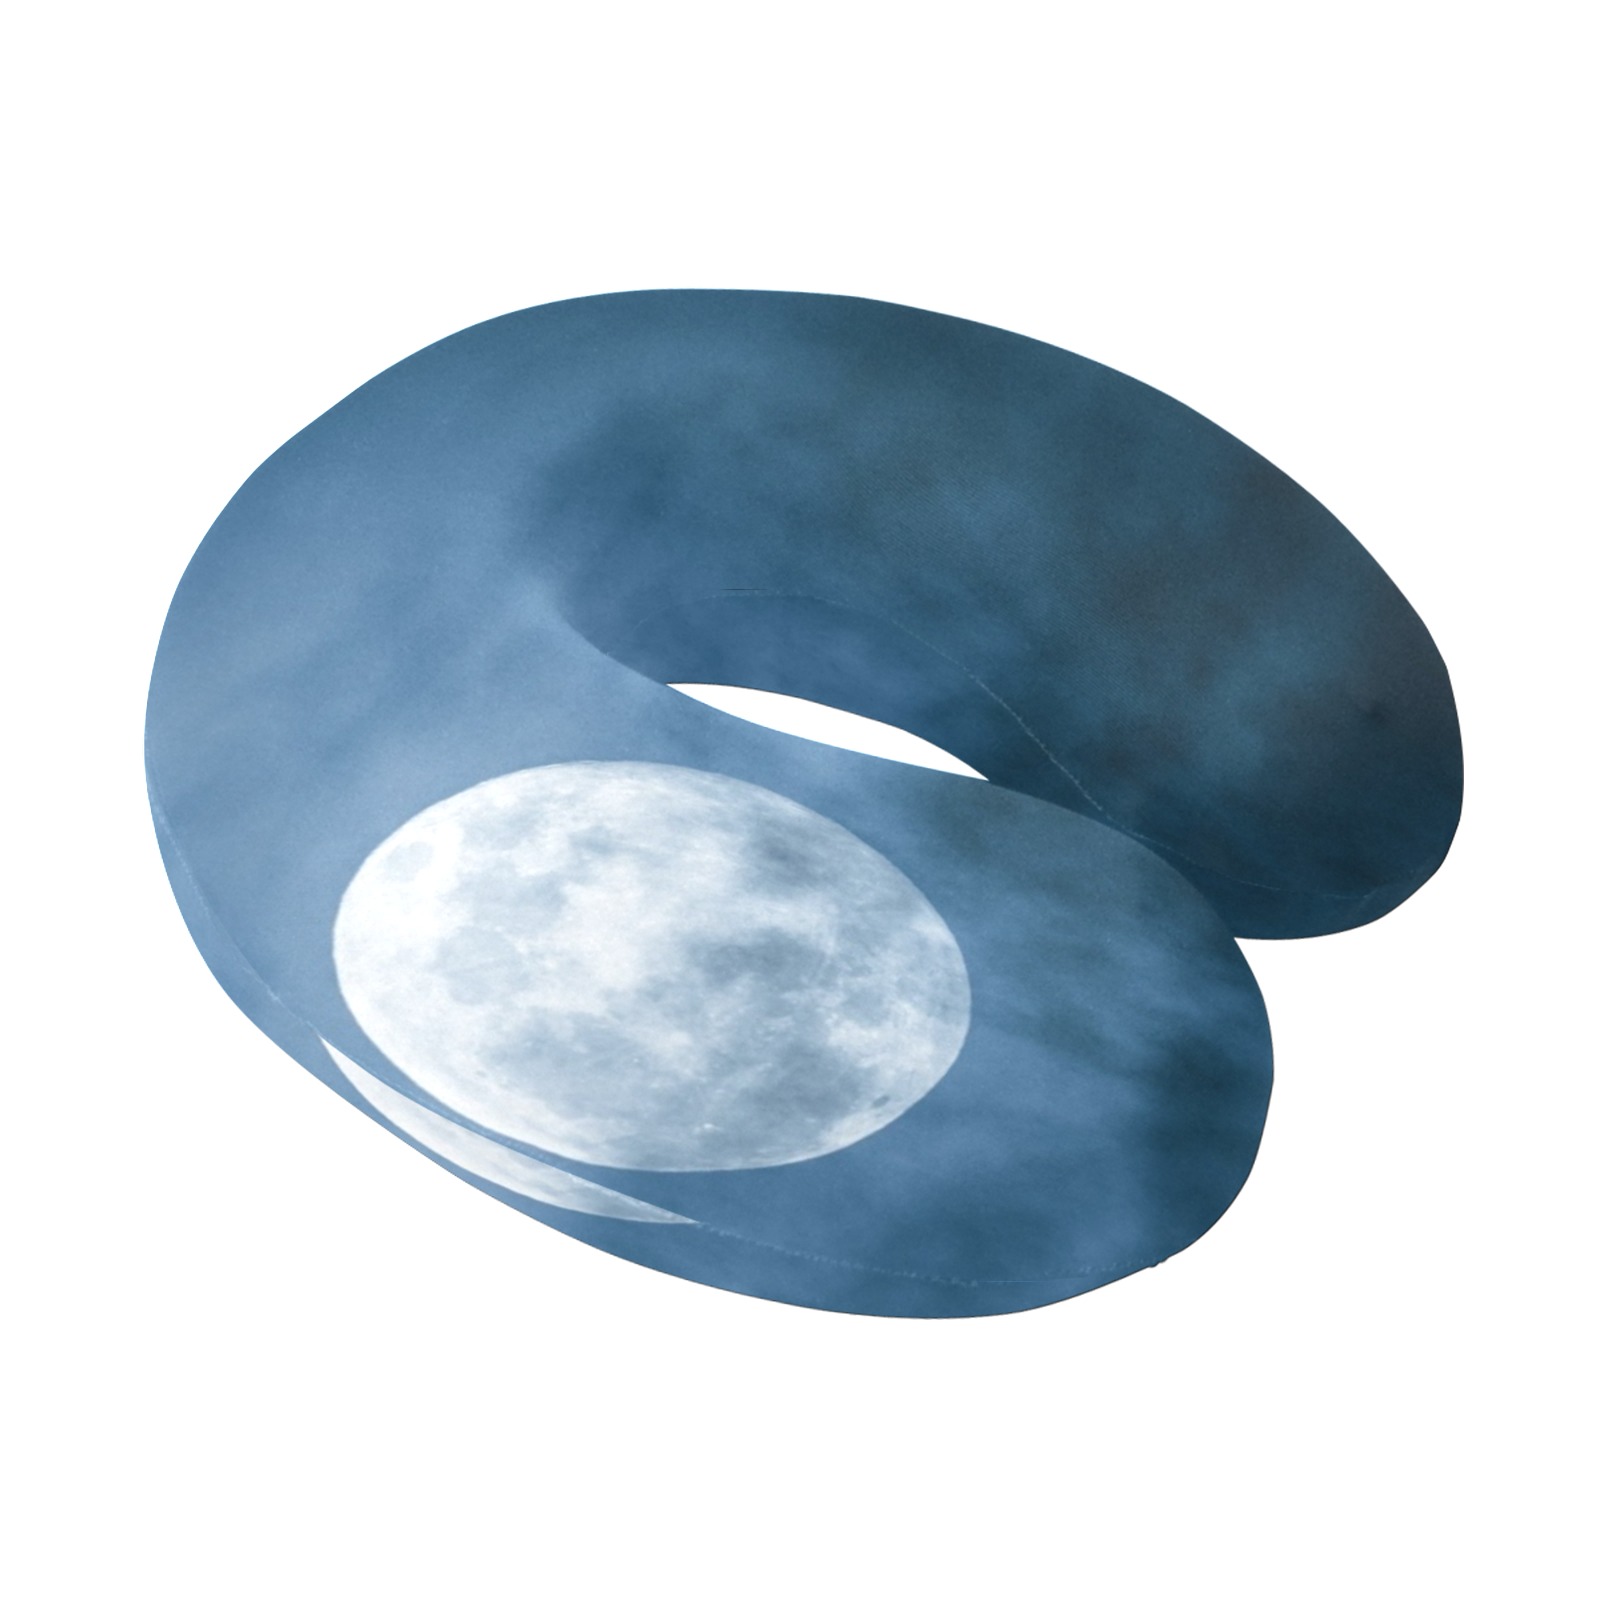 Full Moon U-Shape Travel Pillow